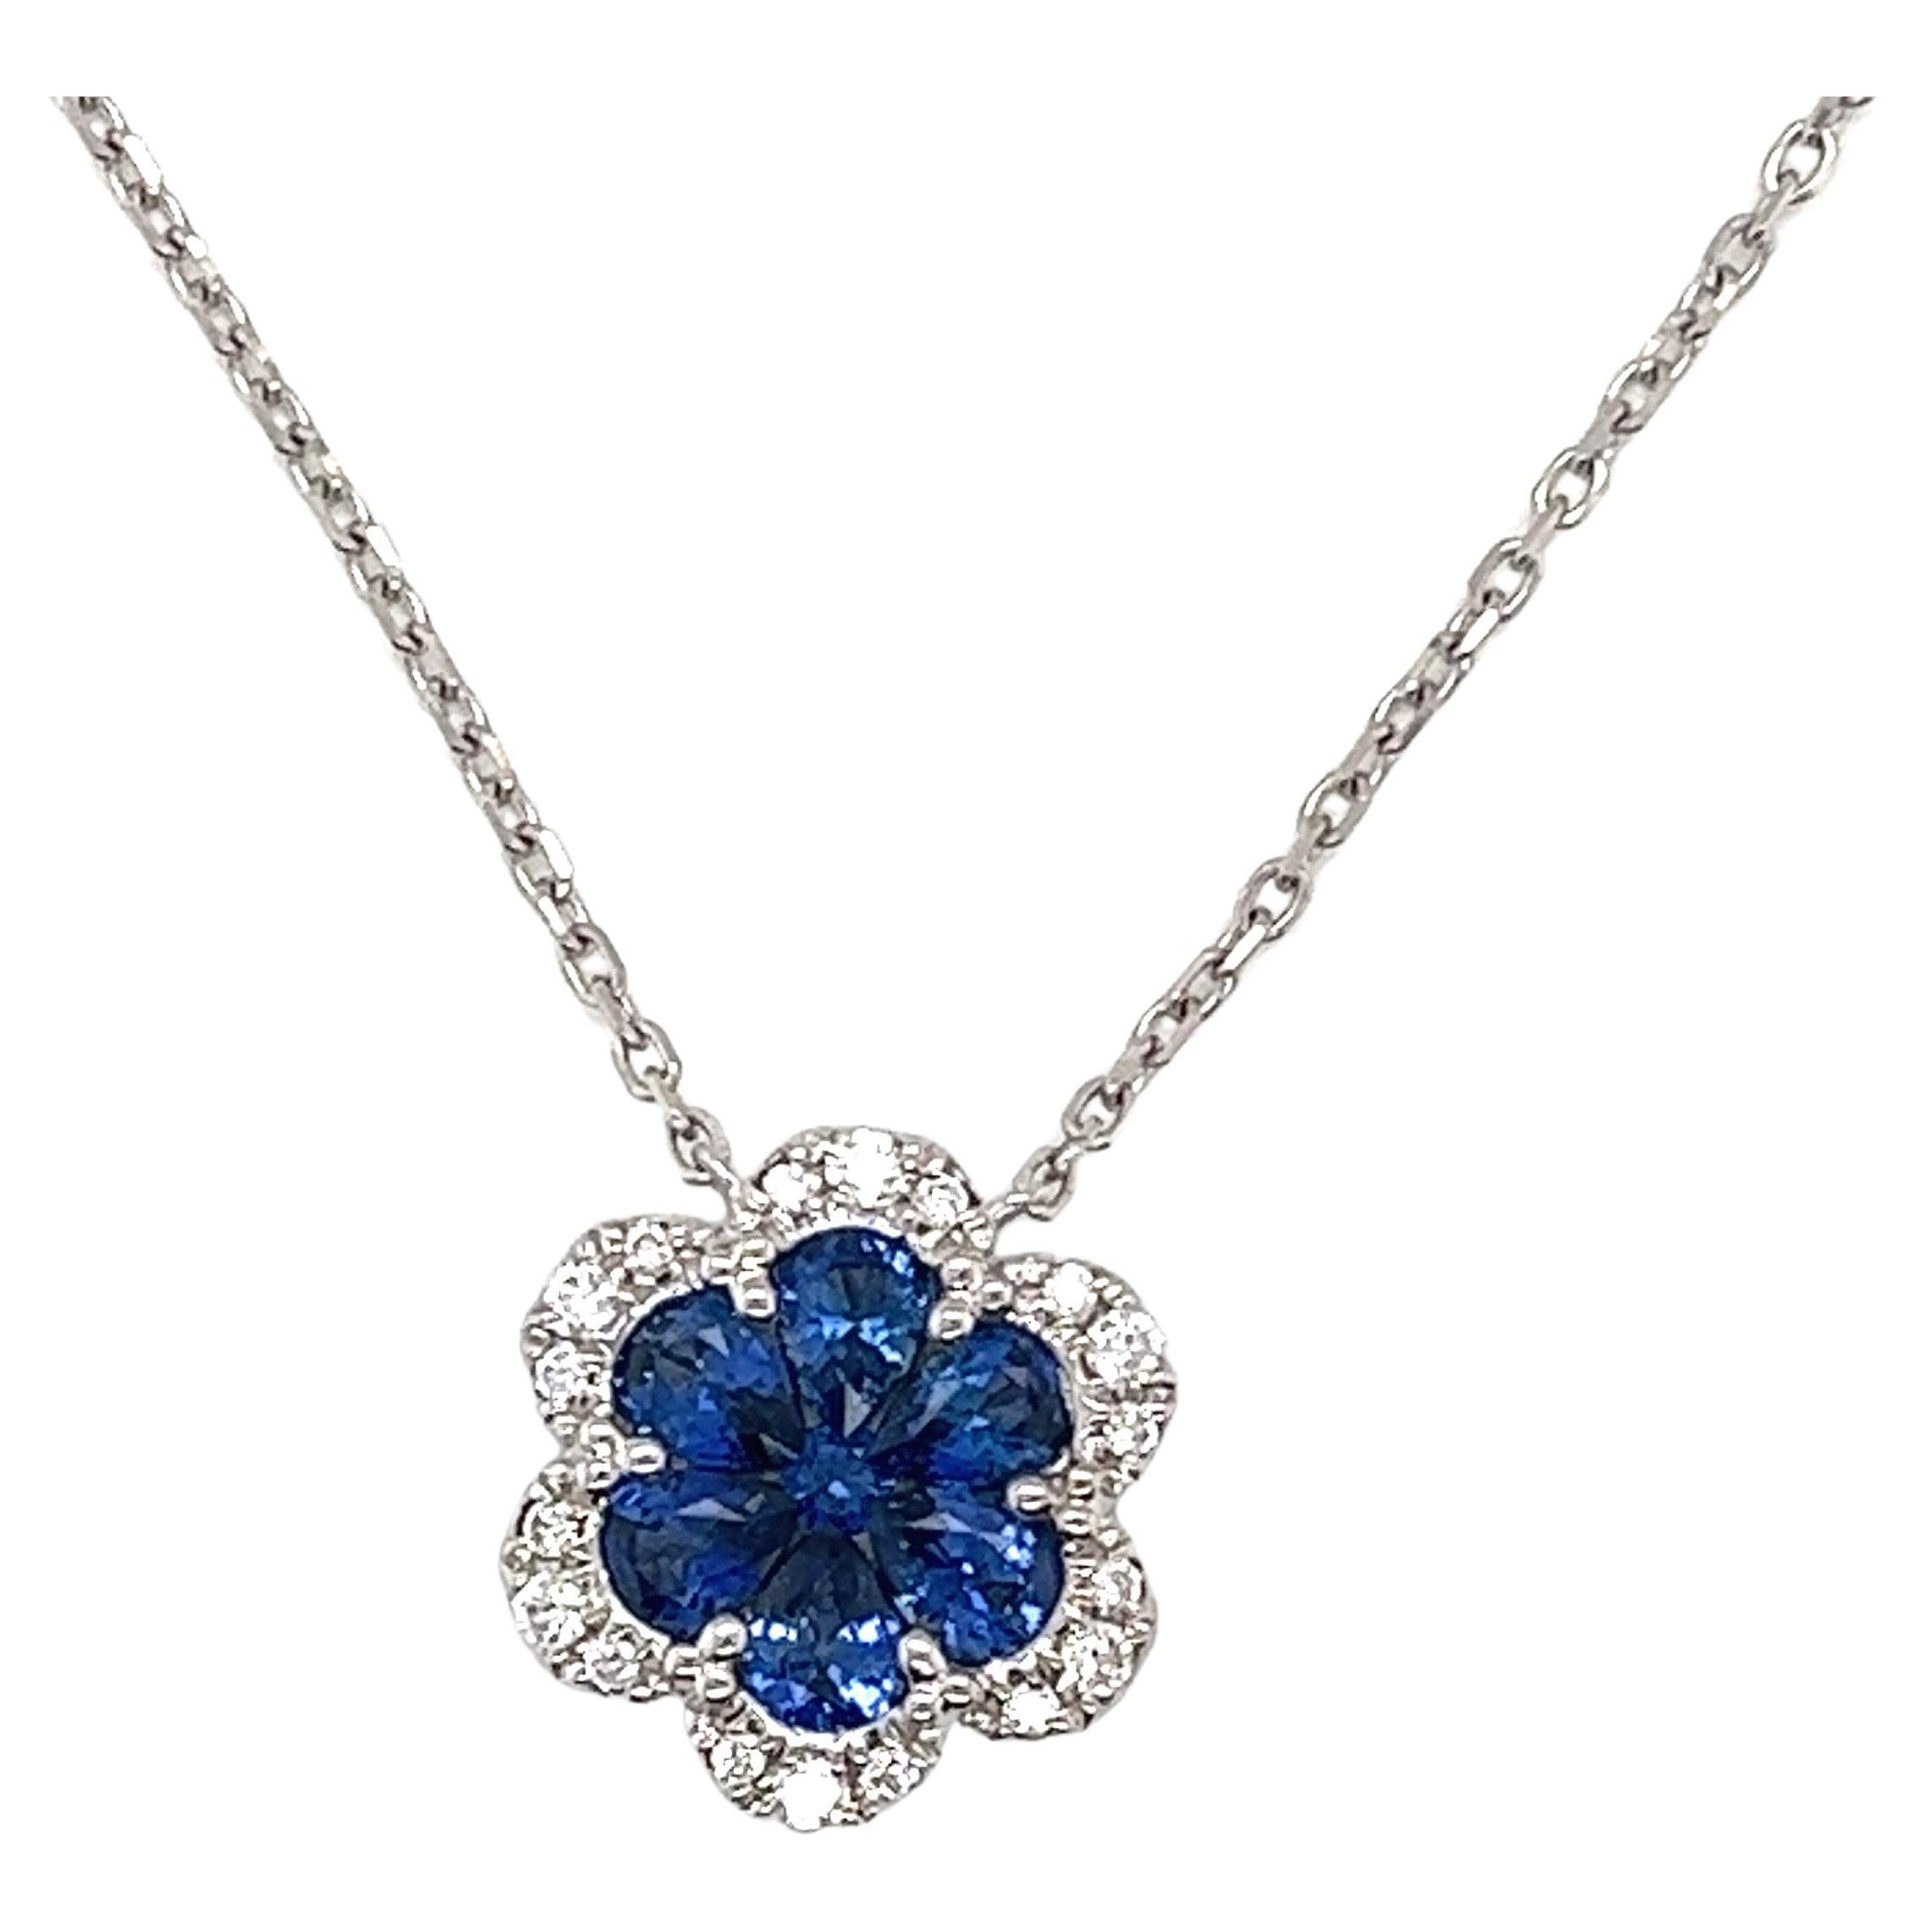 Blue Sapphire & Diamond Necklace in 18 Karat White Gold